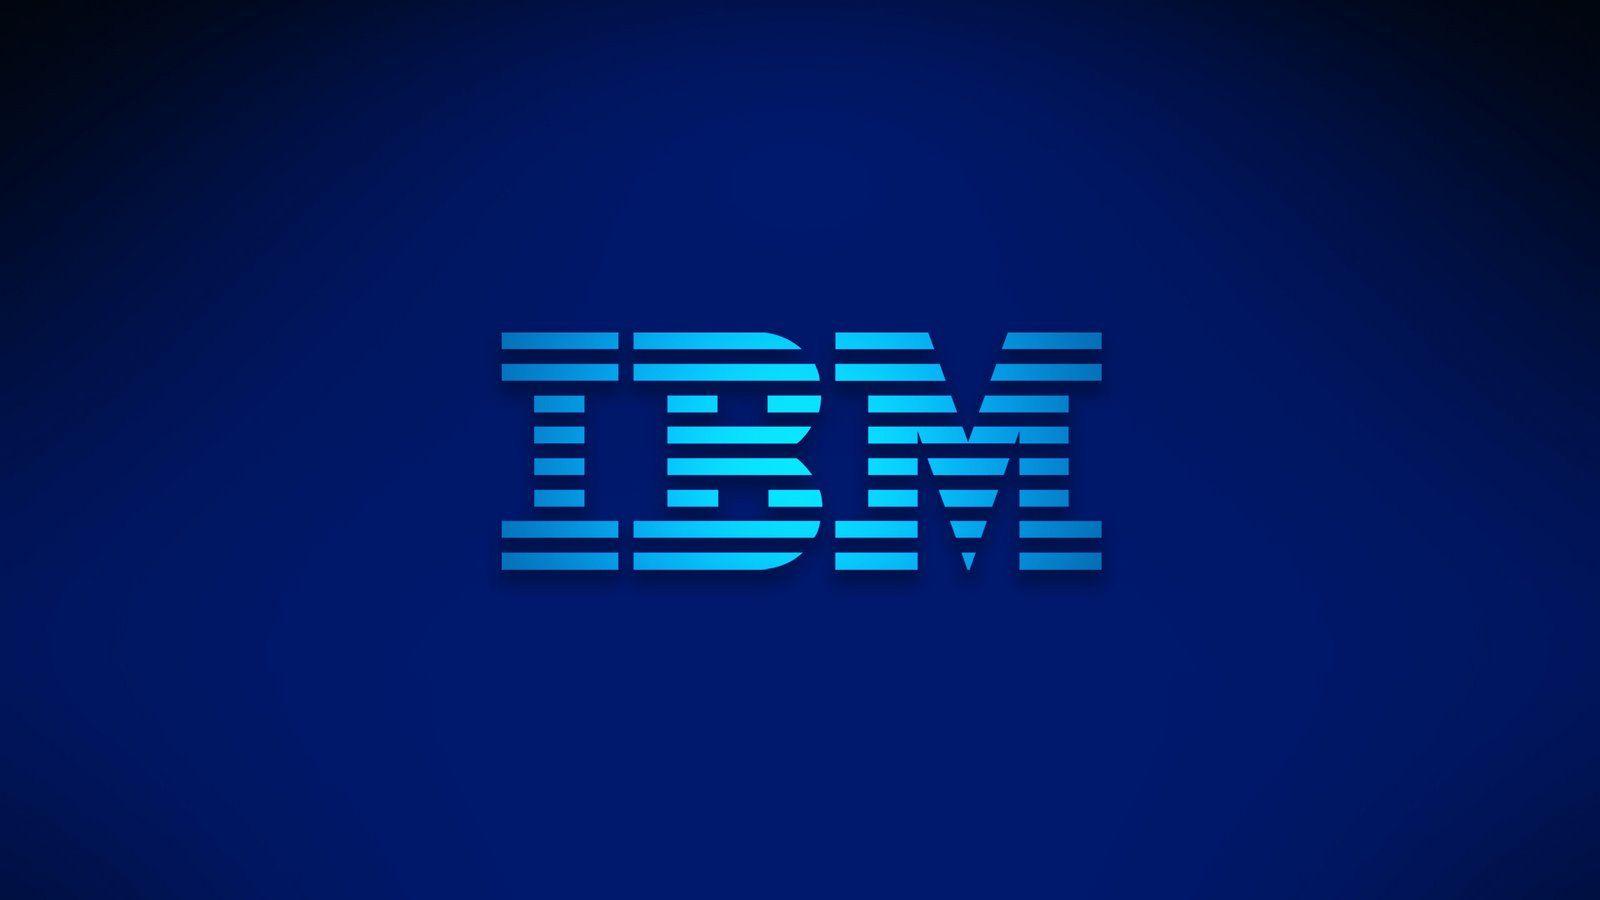 IBM Wallpaper 22 X 900